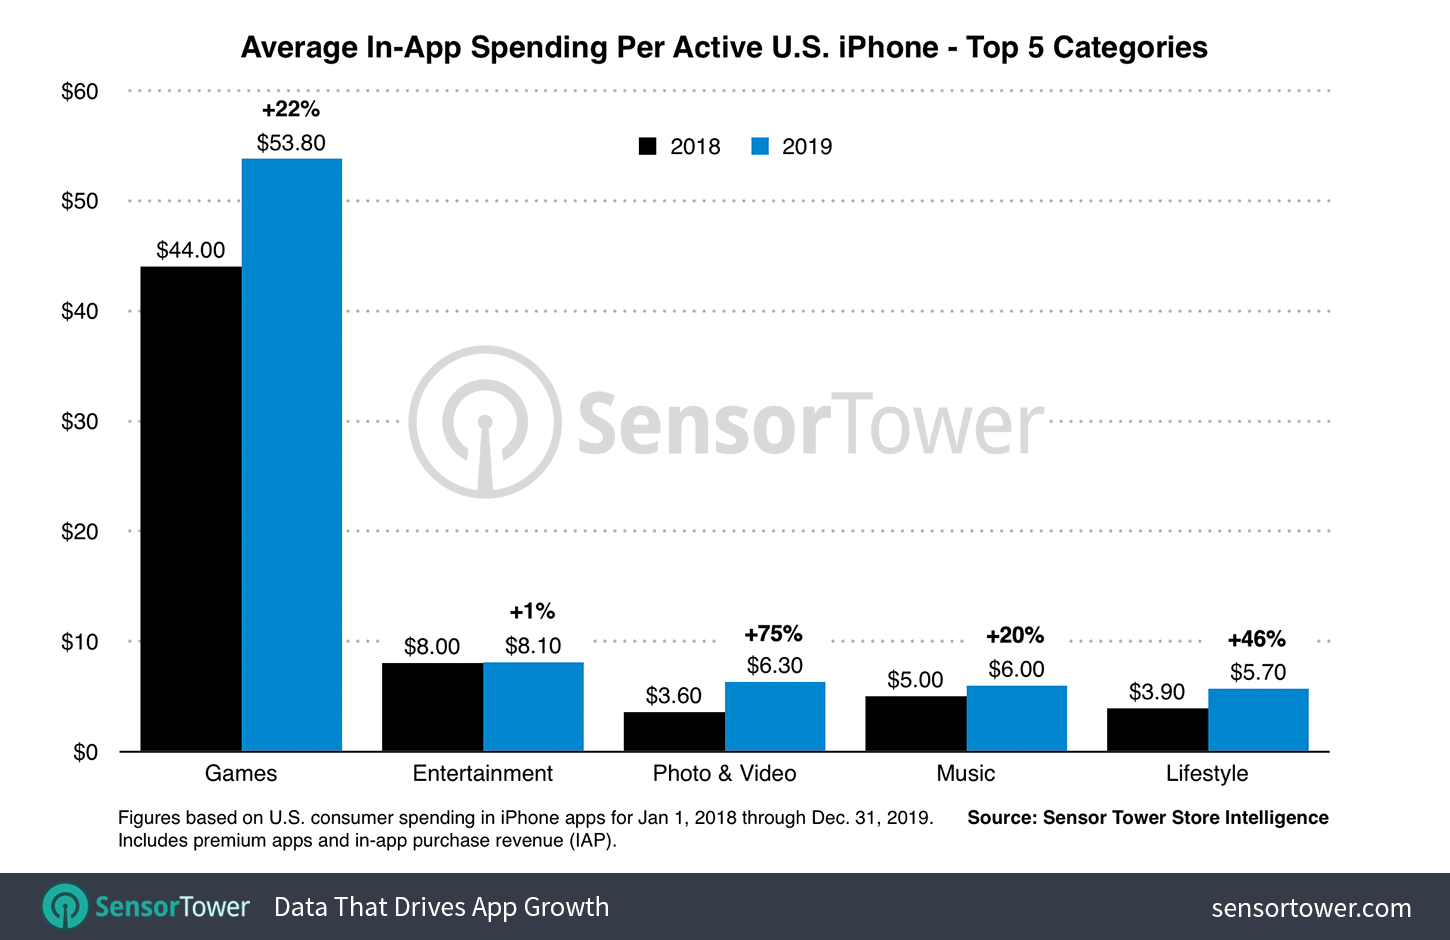 U.S. iPhone Category Revenue Per Active Device 2019 vs. 2018